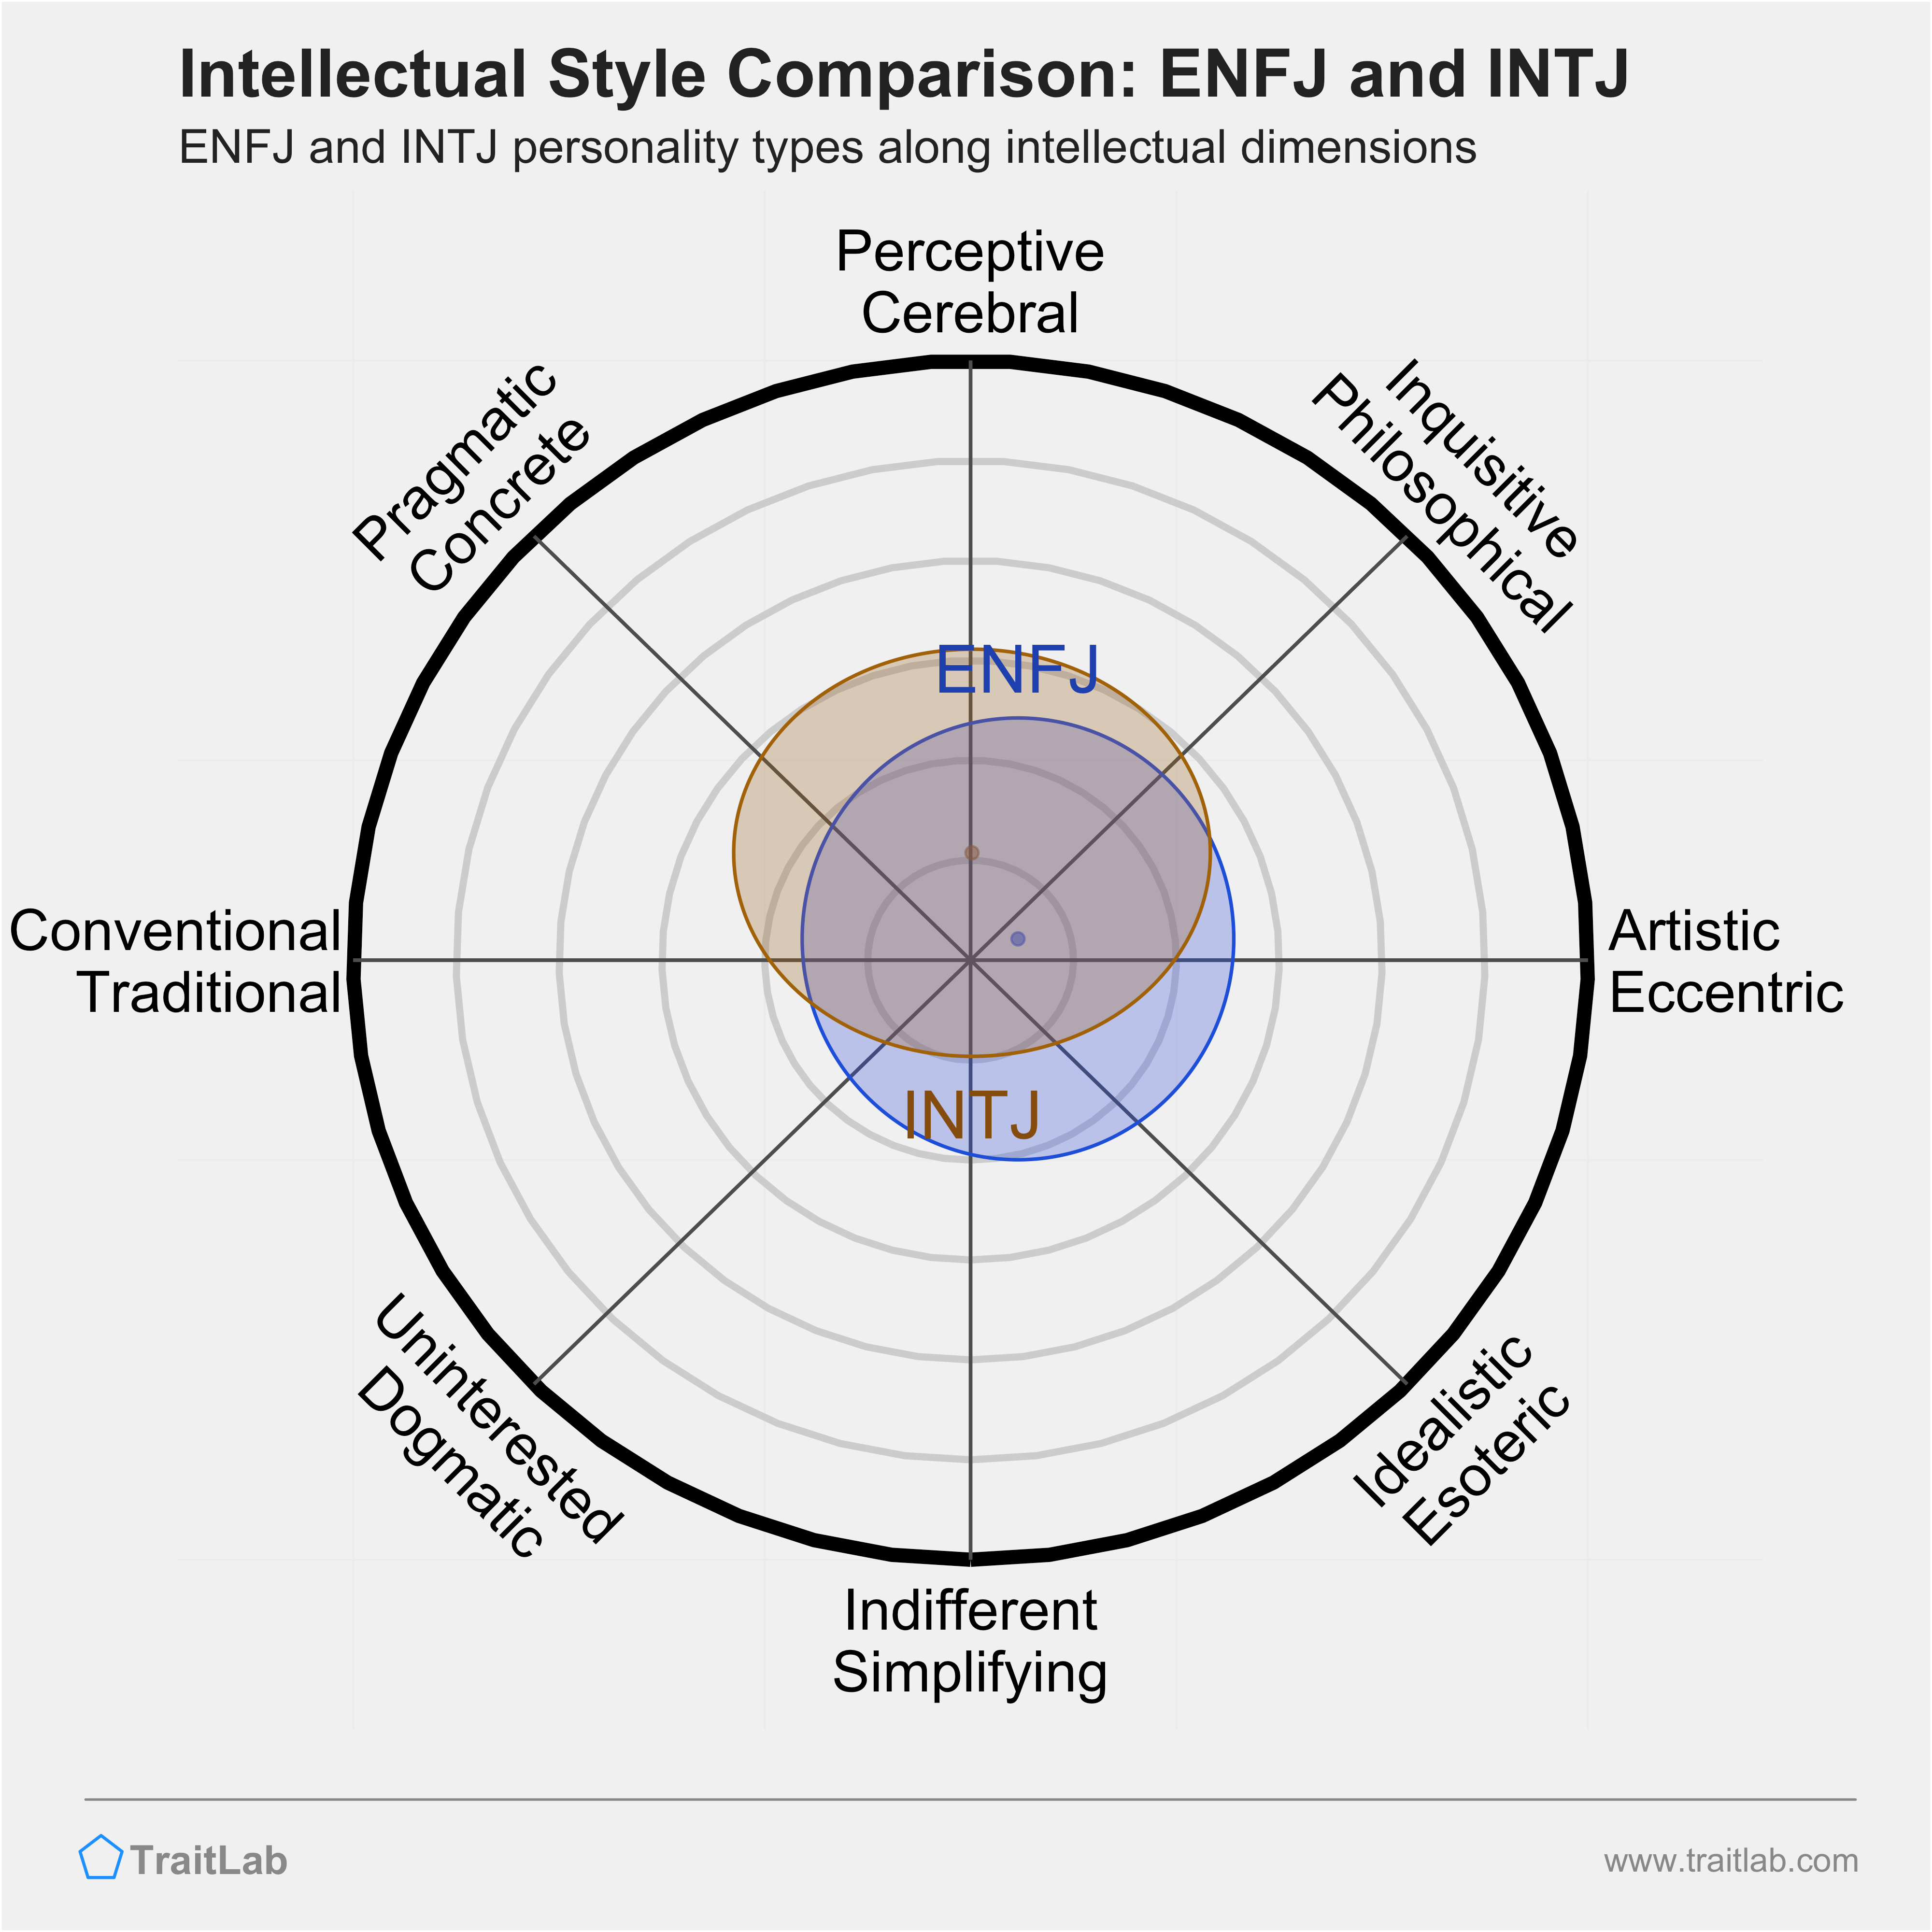 ENFJ and INTJ comparison across intellectual dimensions